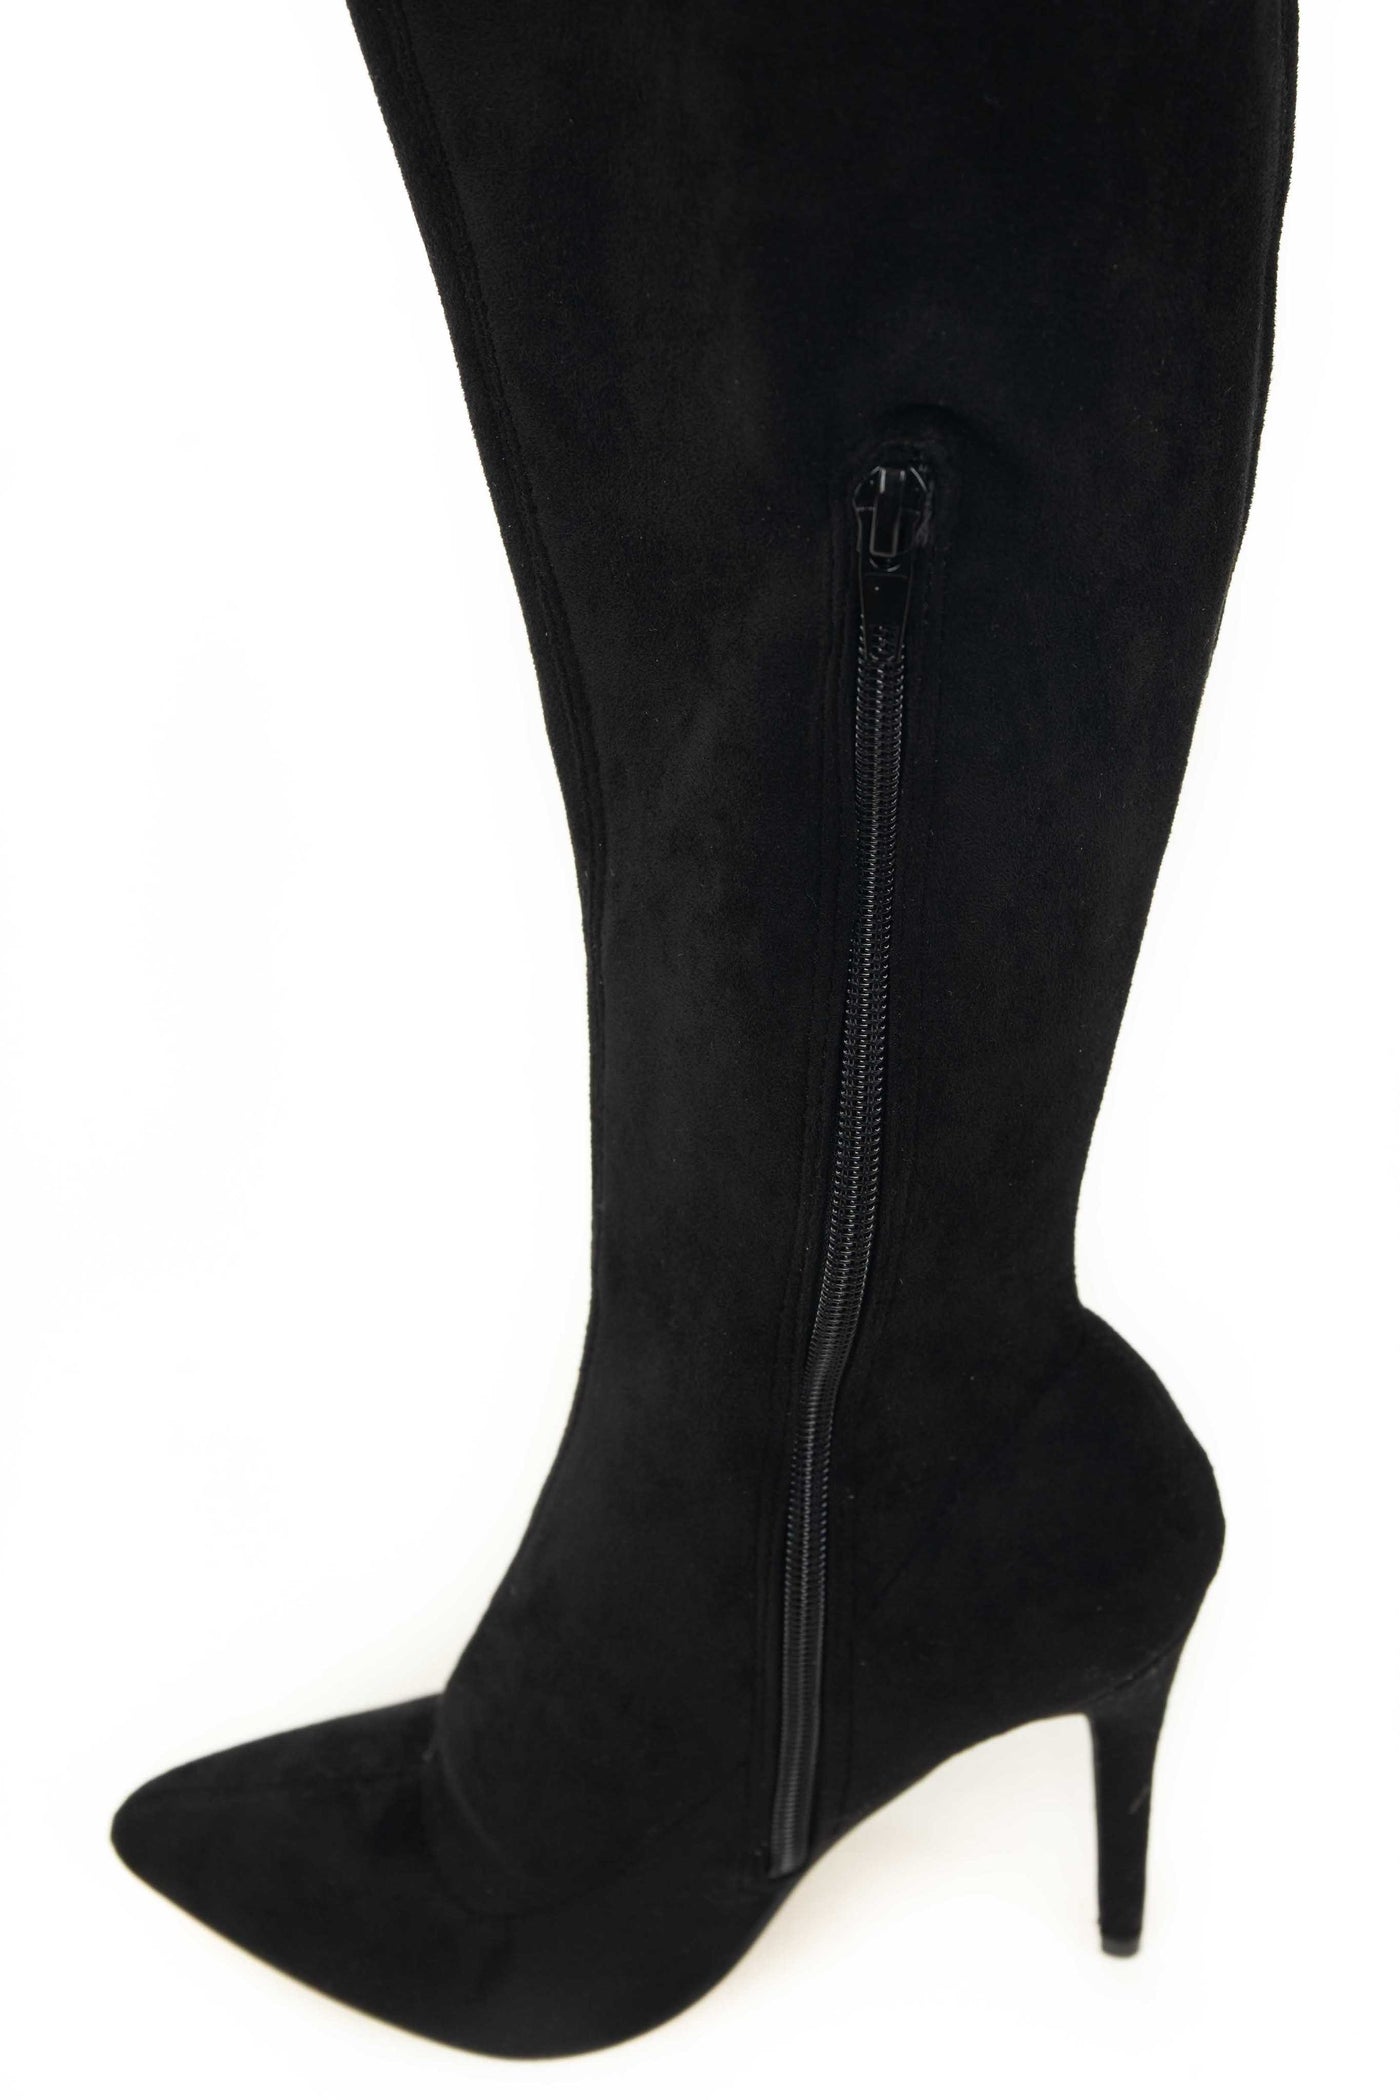 Black Suede Over the Knee Stiletto Heel Boots